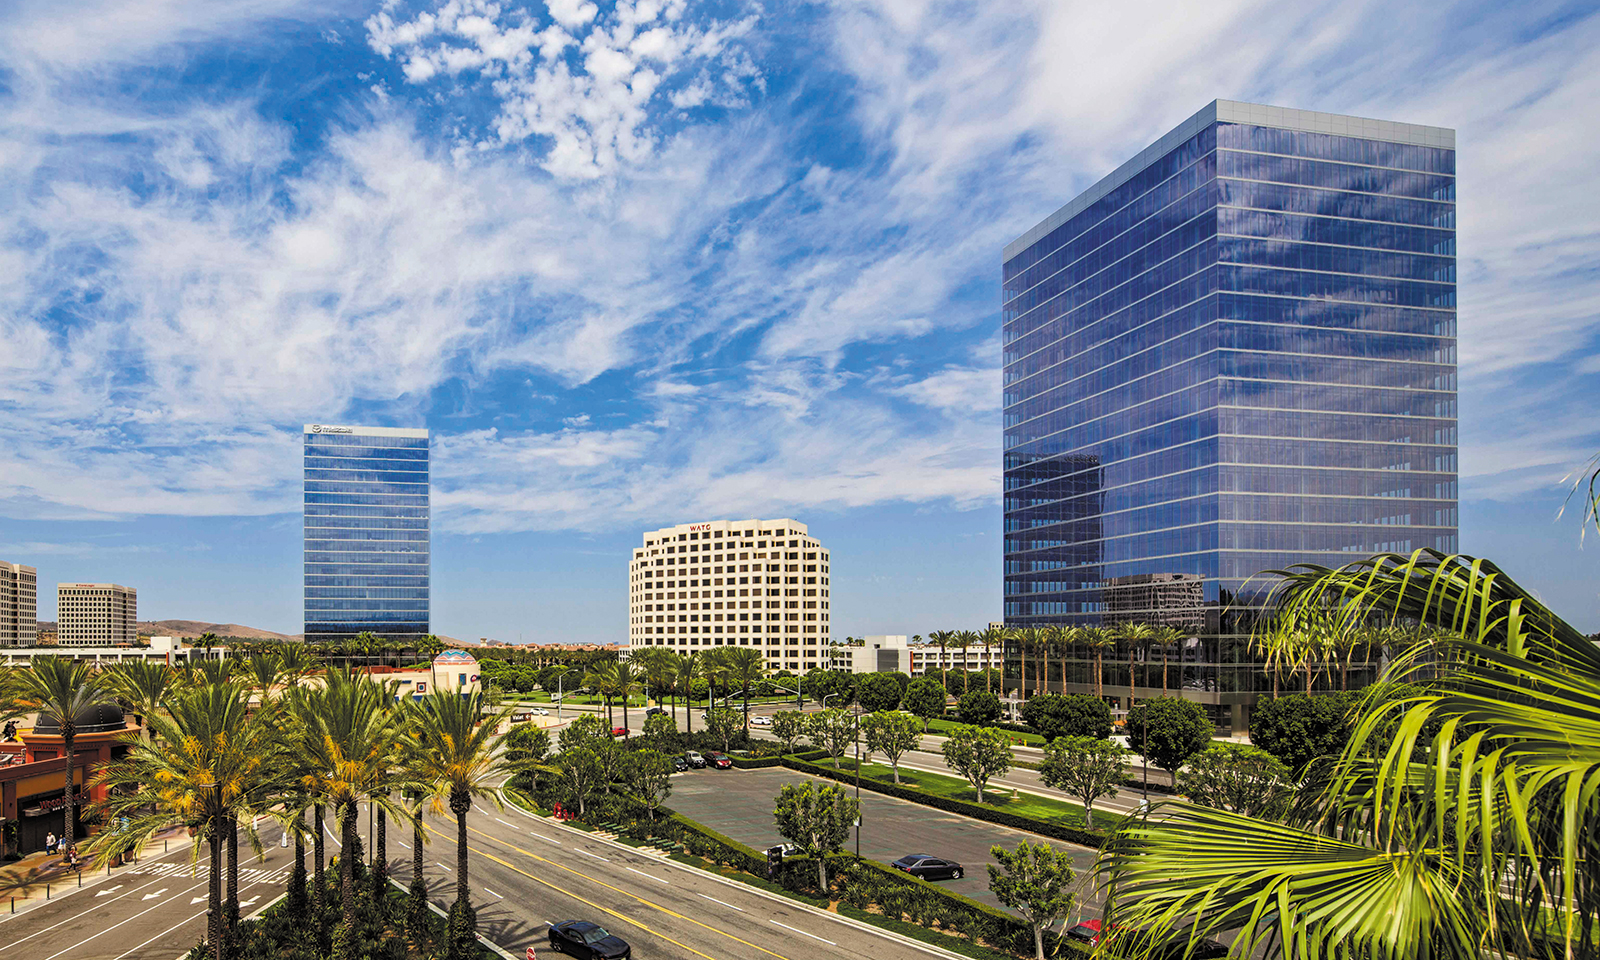 Top U.S. companies that call Irvine home